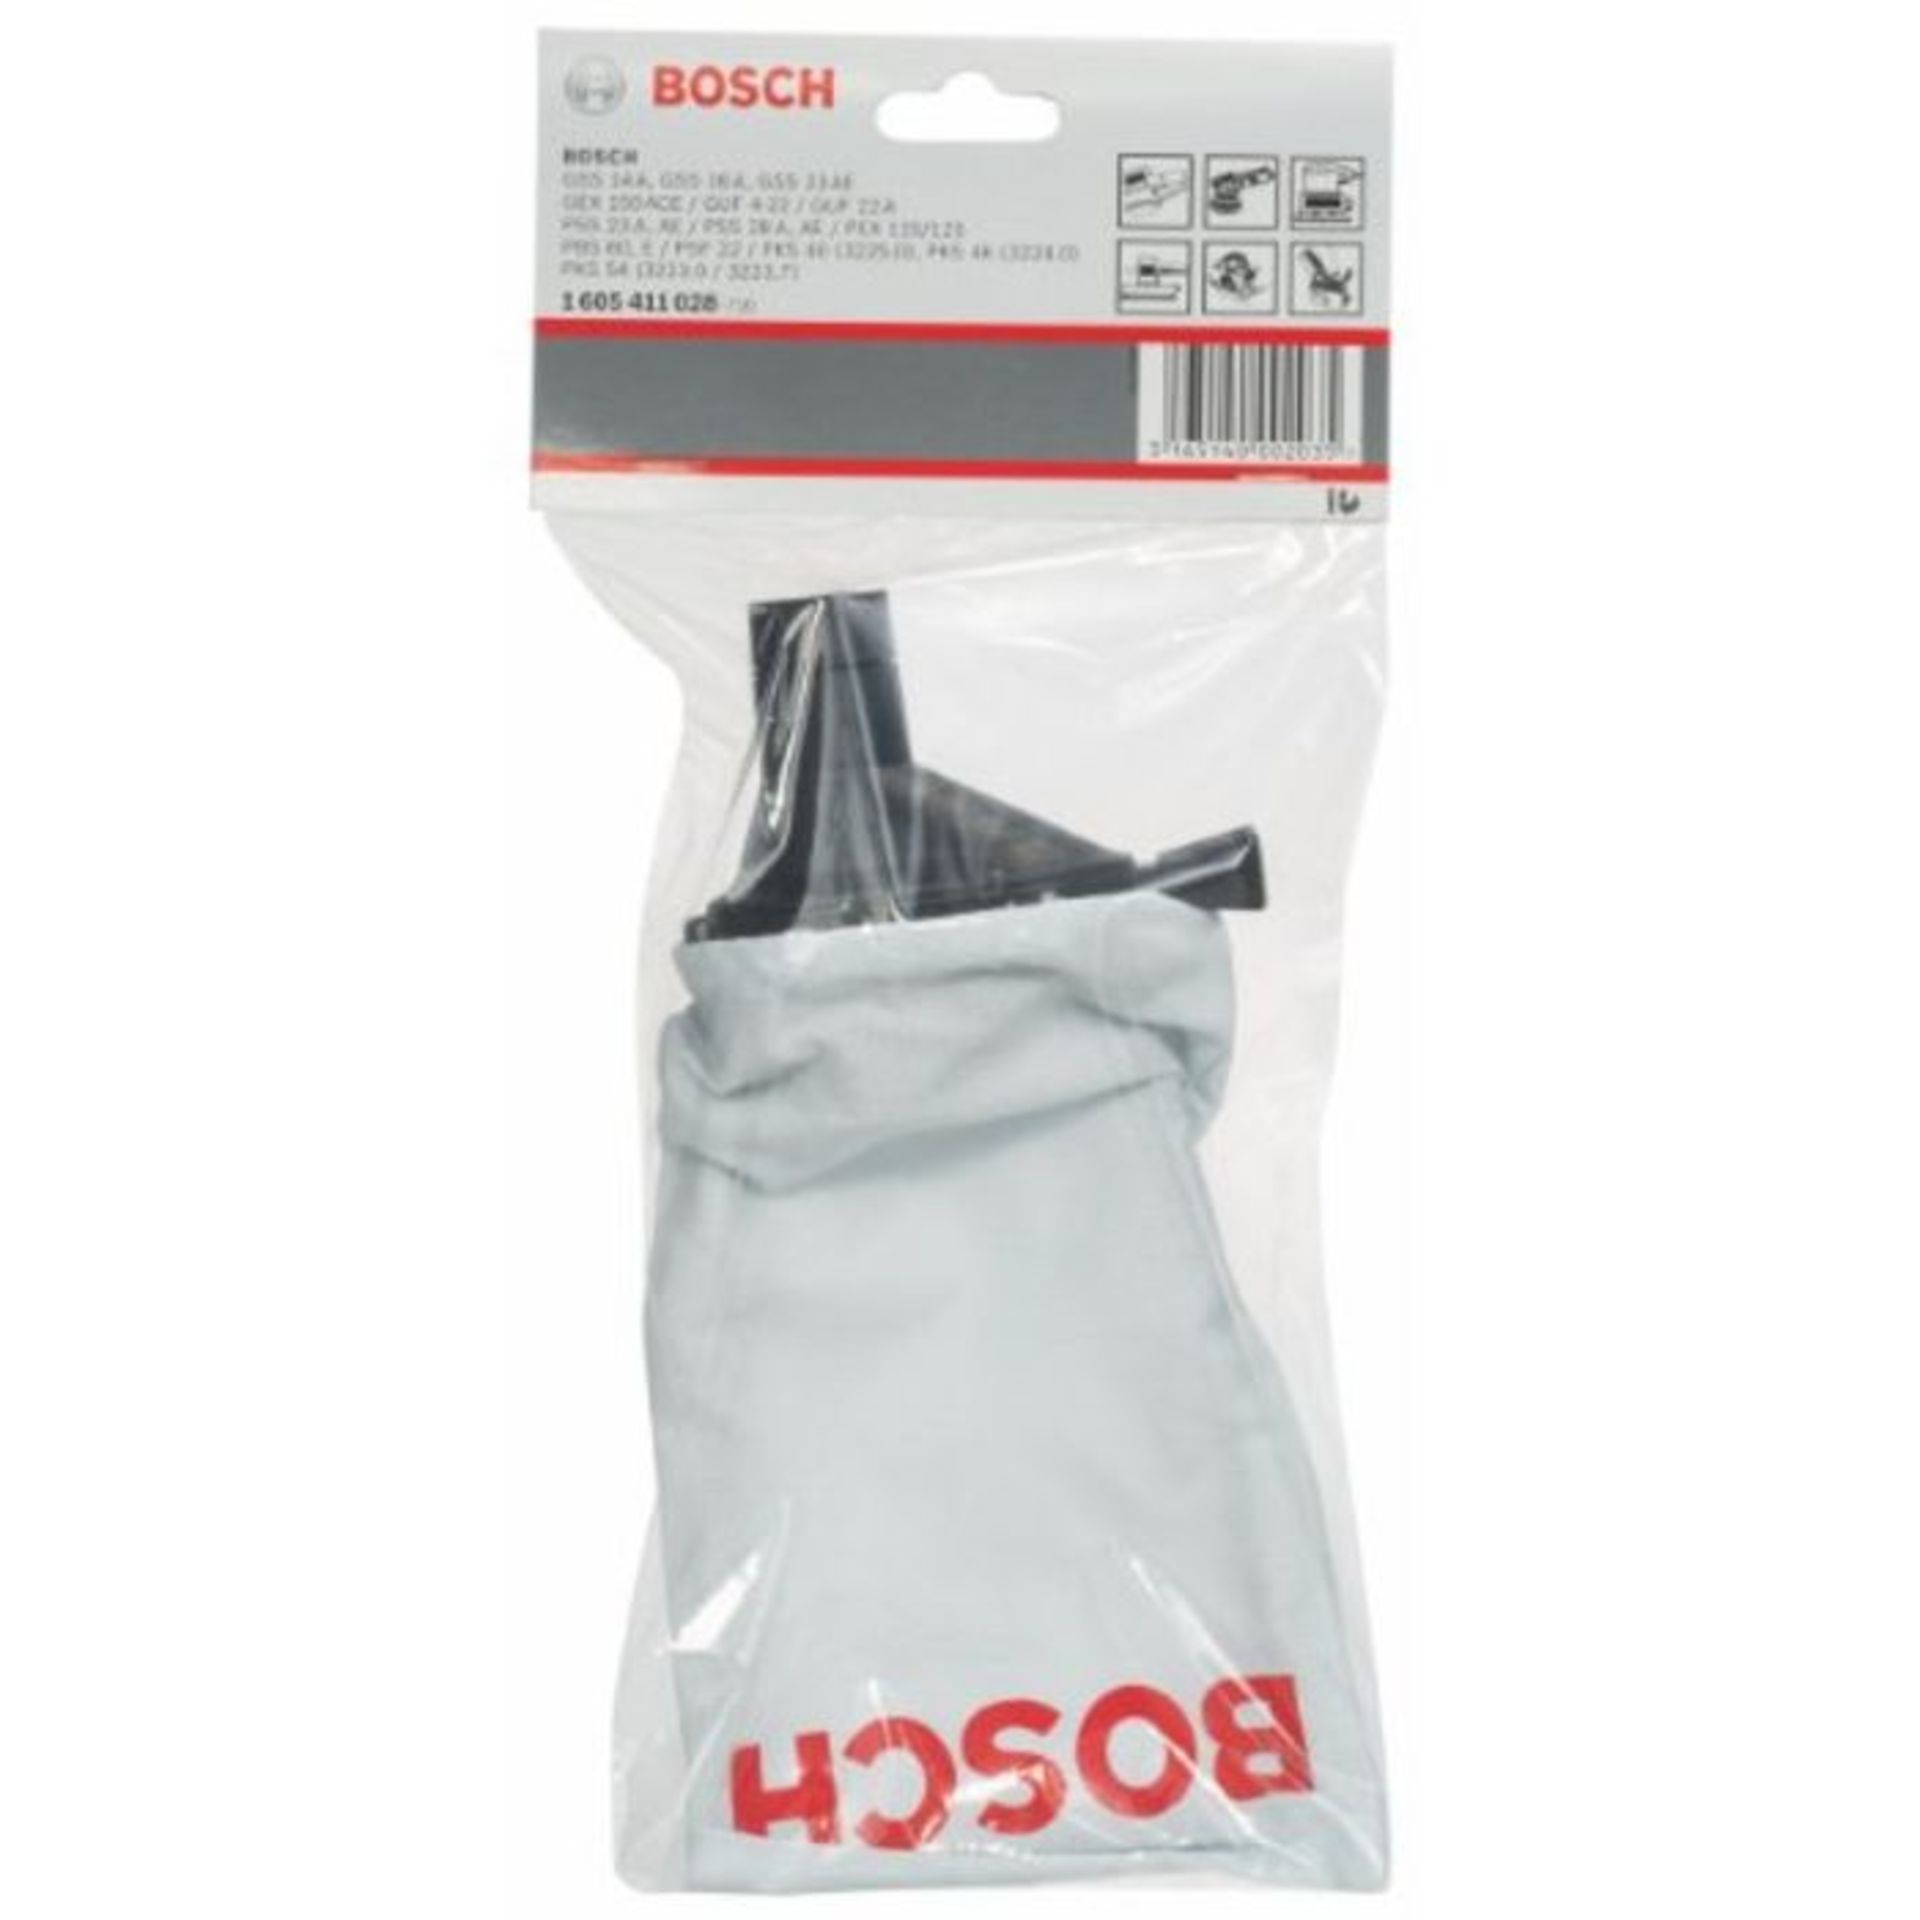 Bosch 1605411028 Dust Bag for Random Orbit, Grey